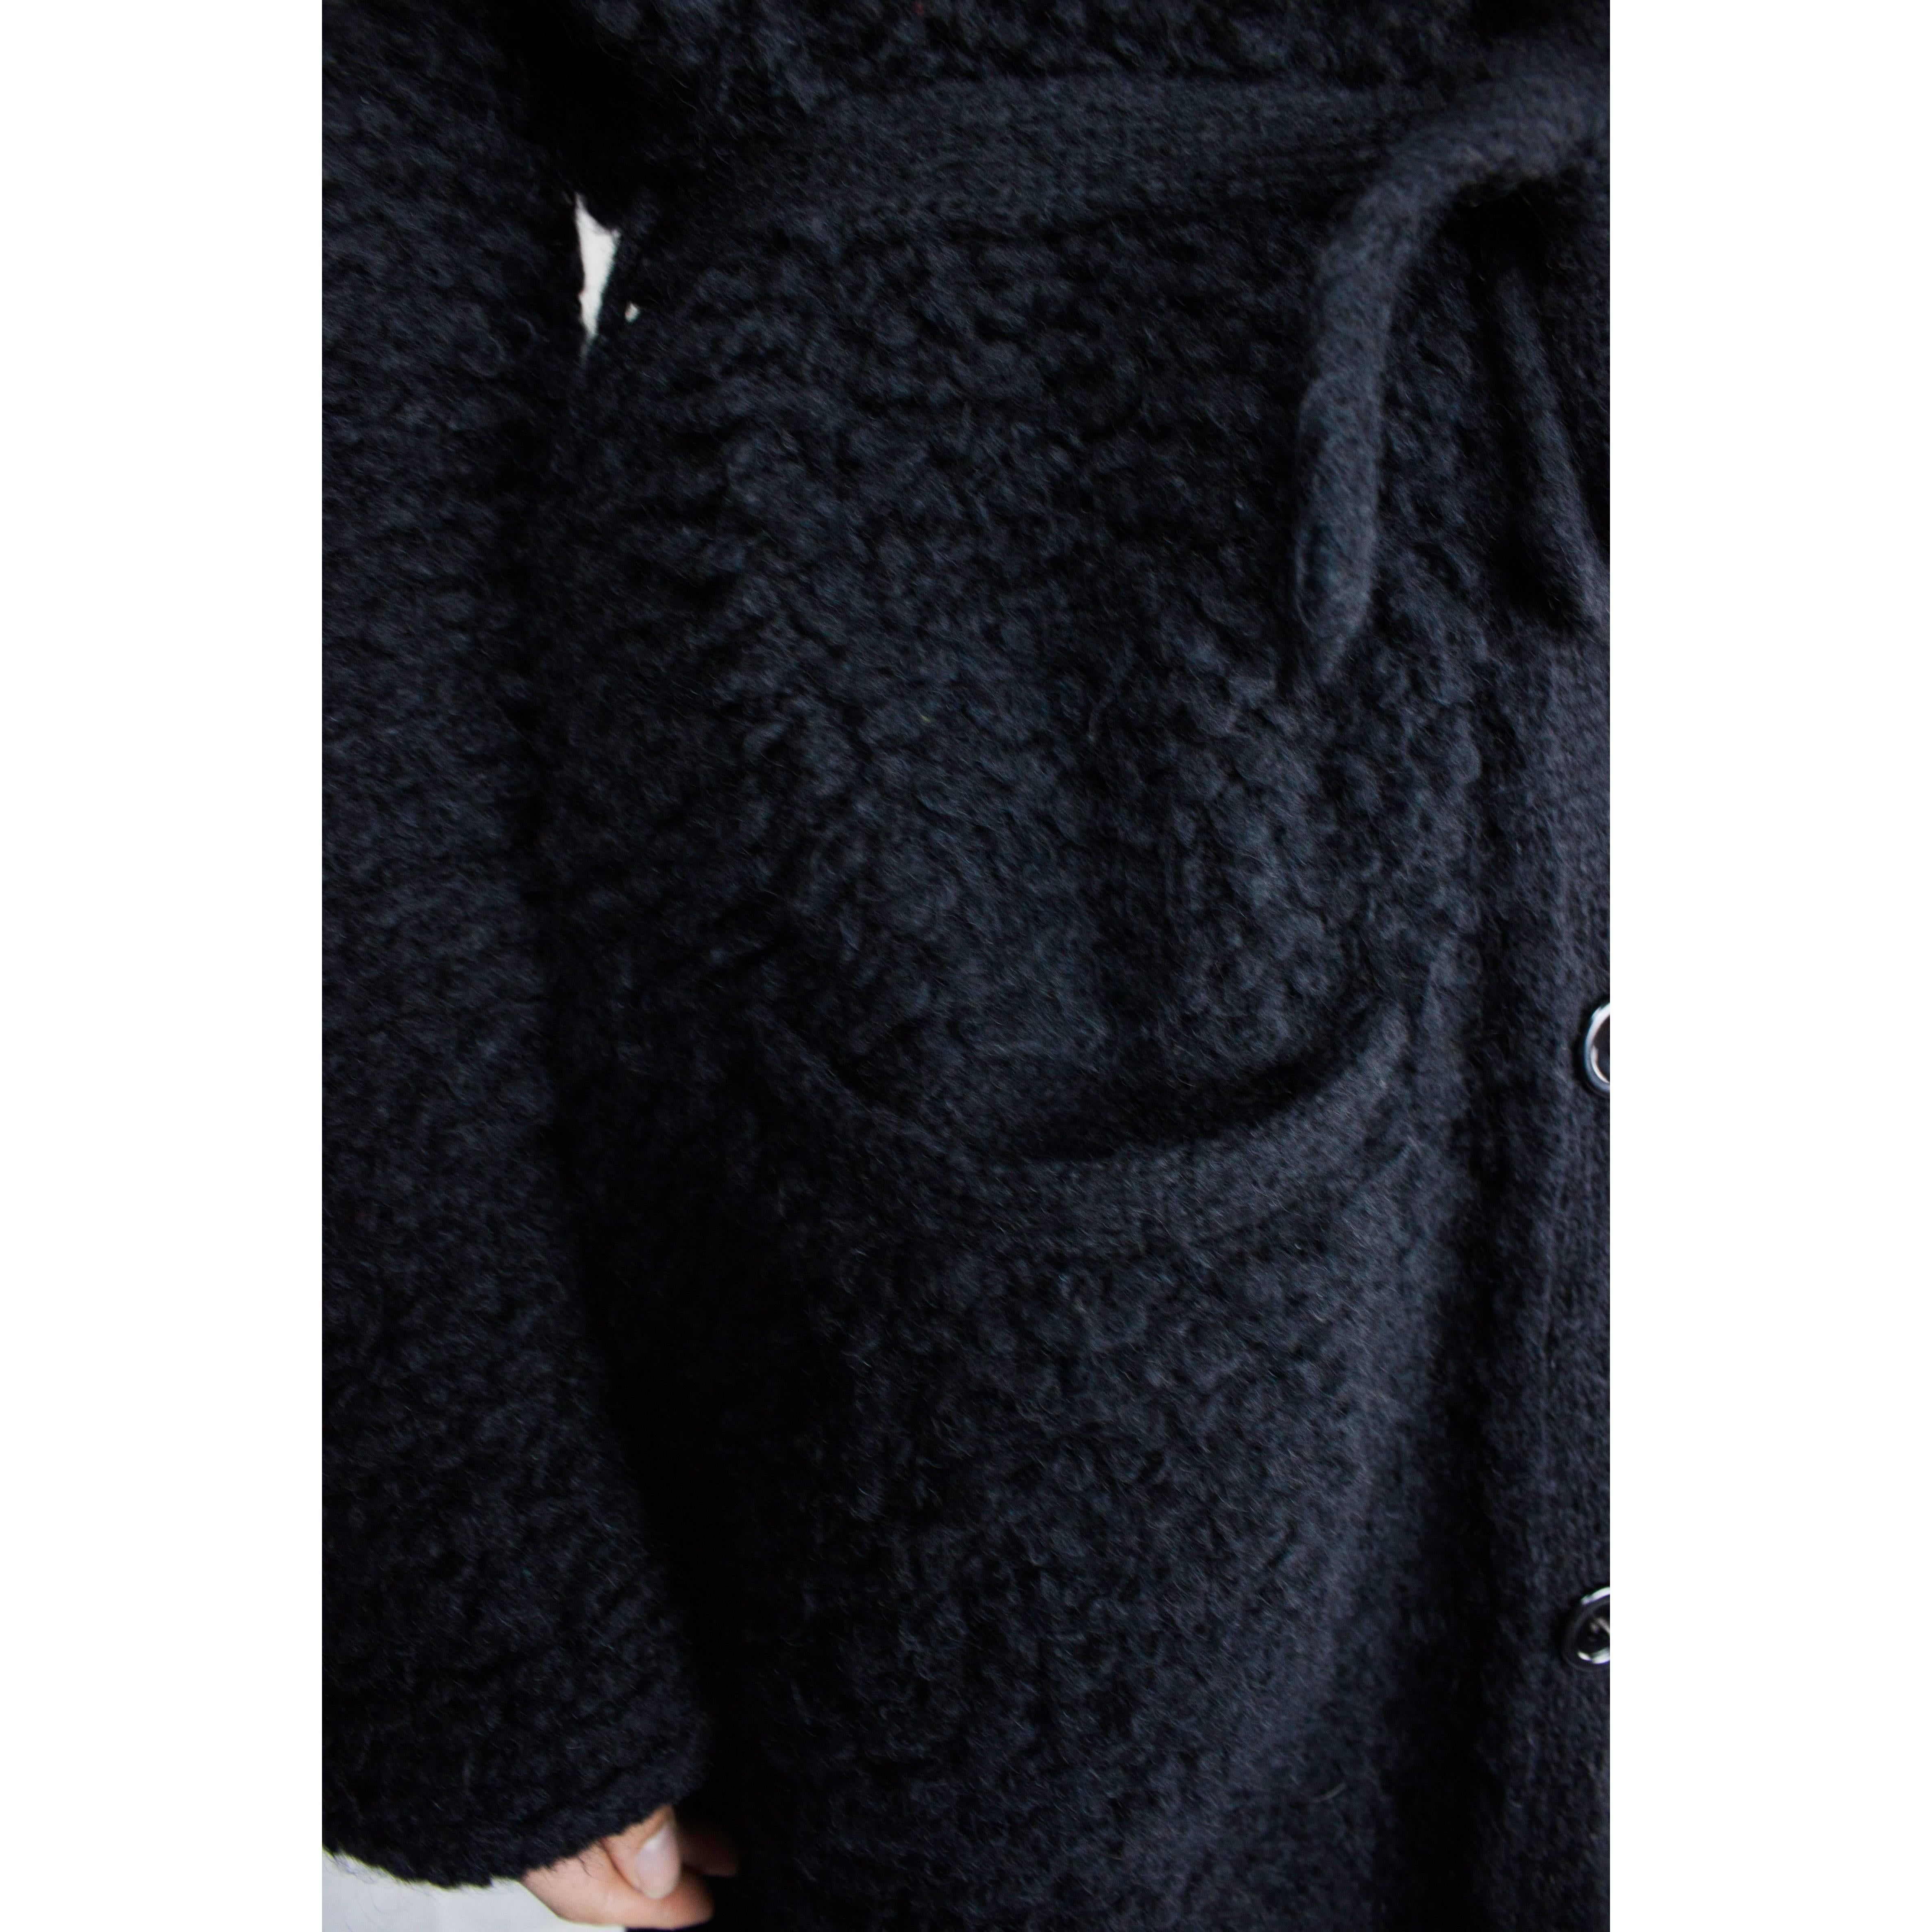 Important Sonia Rykiel knitted black wool coat, circa 1960s 3